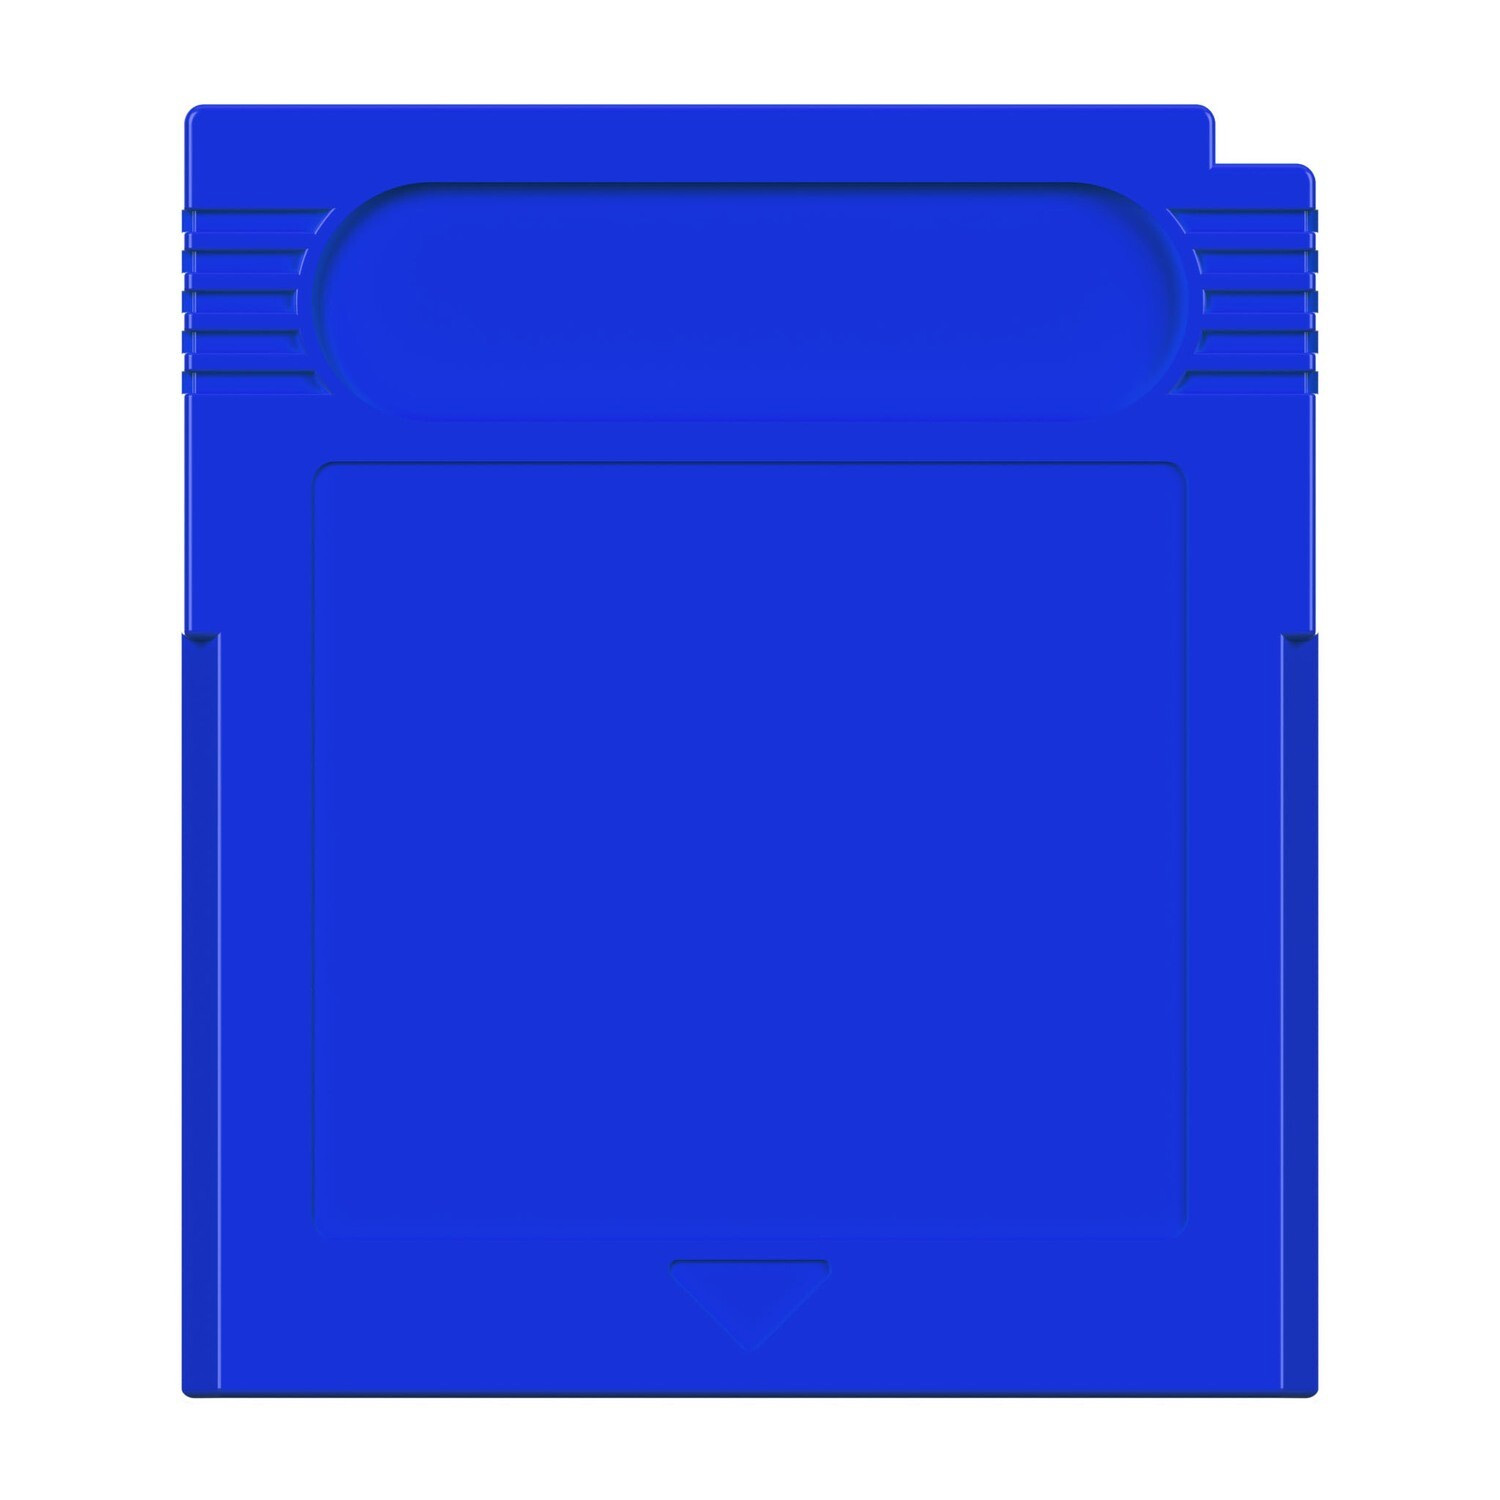 Game Boy Module Shell (Blue)